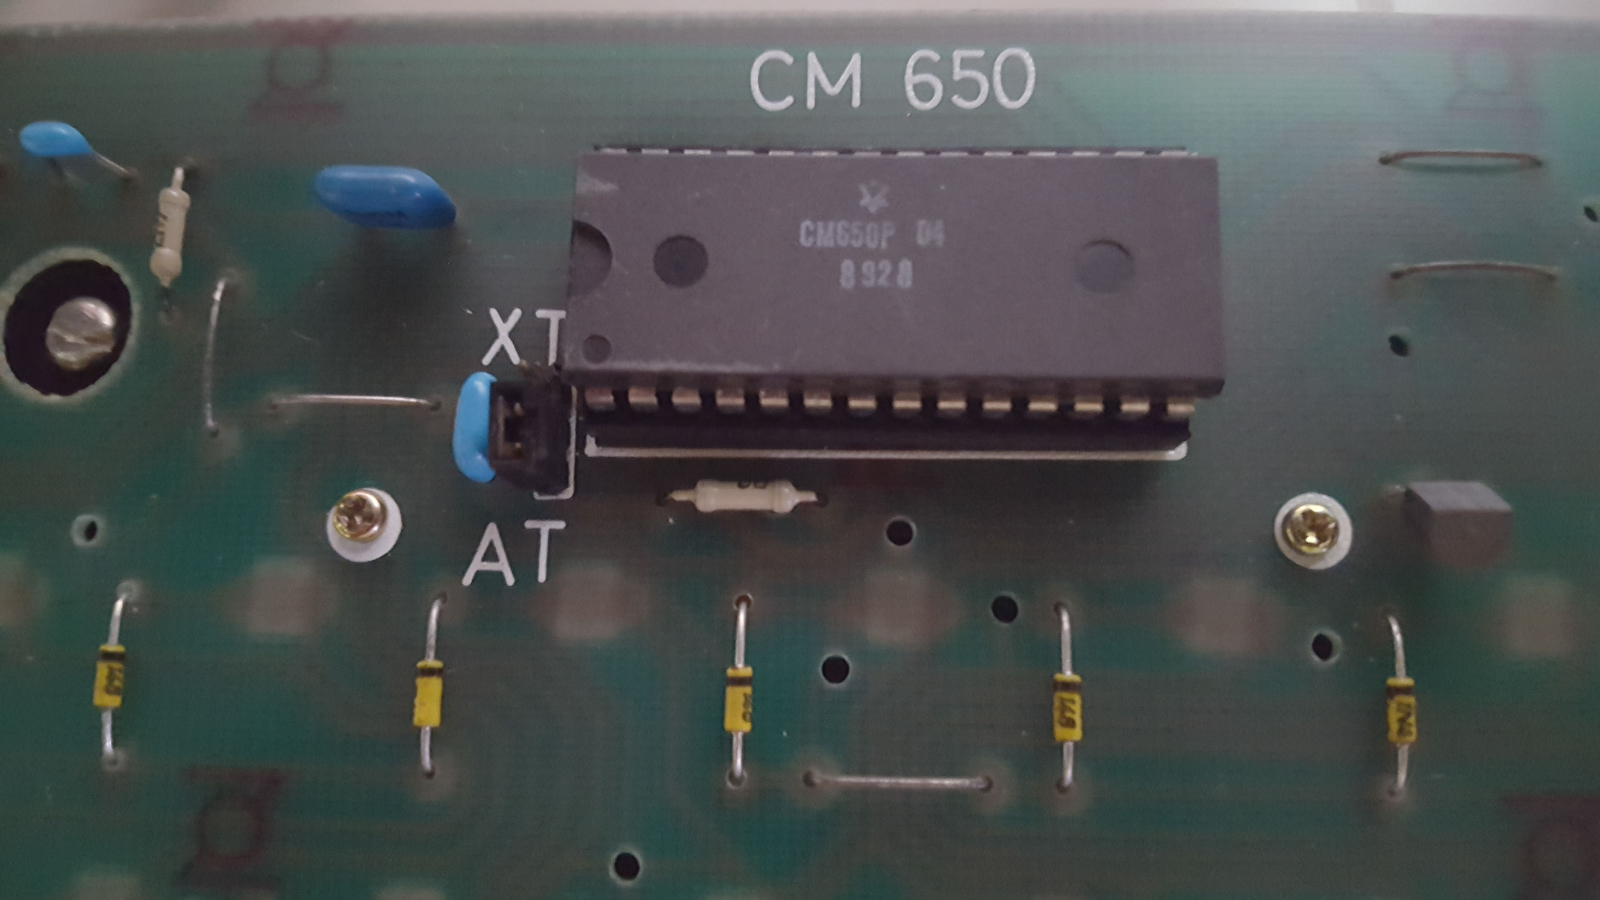 Figura 5: Circuito impresso com microcontrolador e jumper XT/AT em destaque